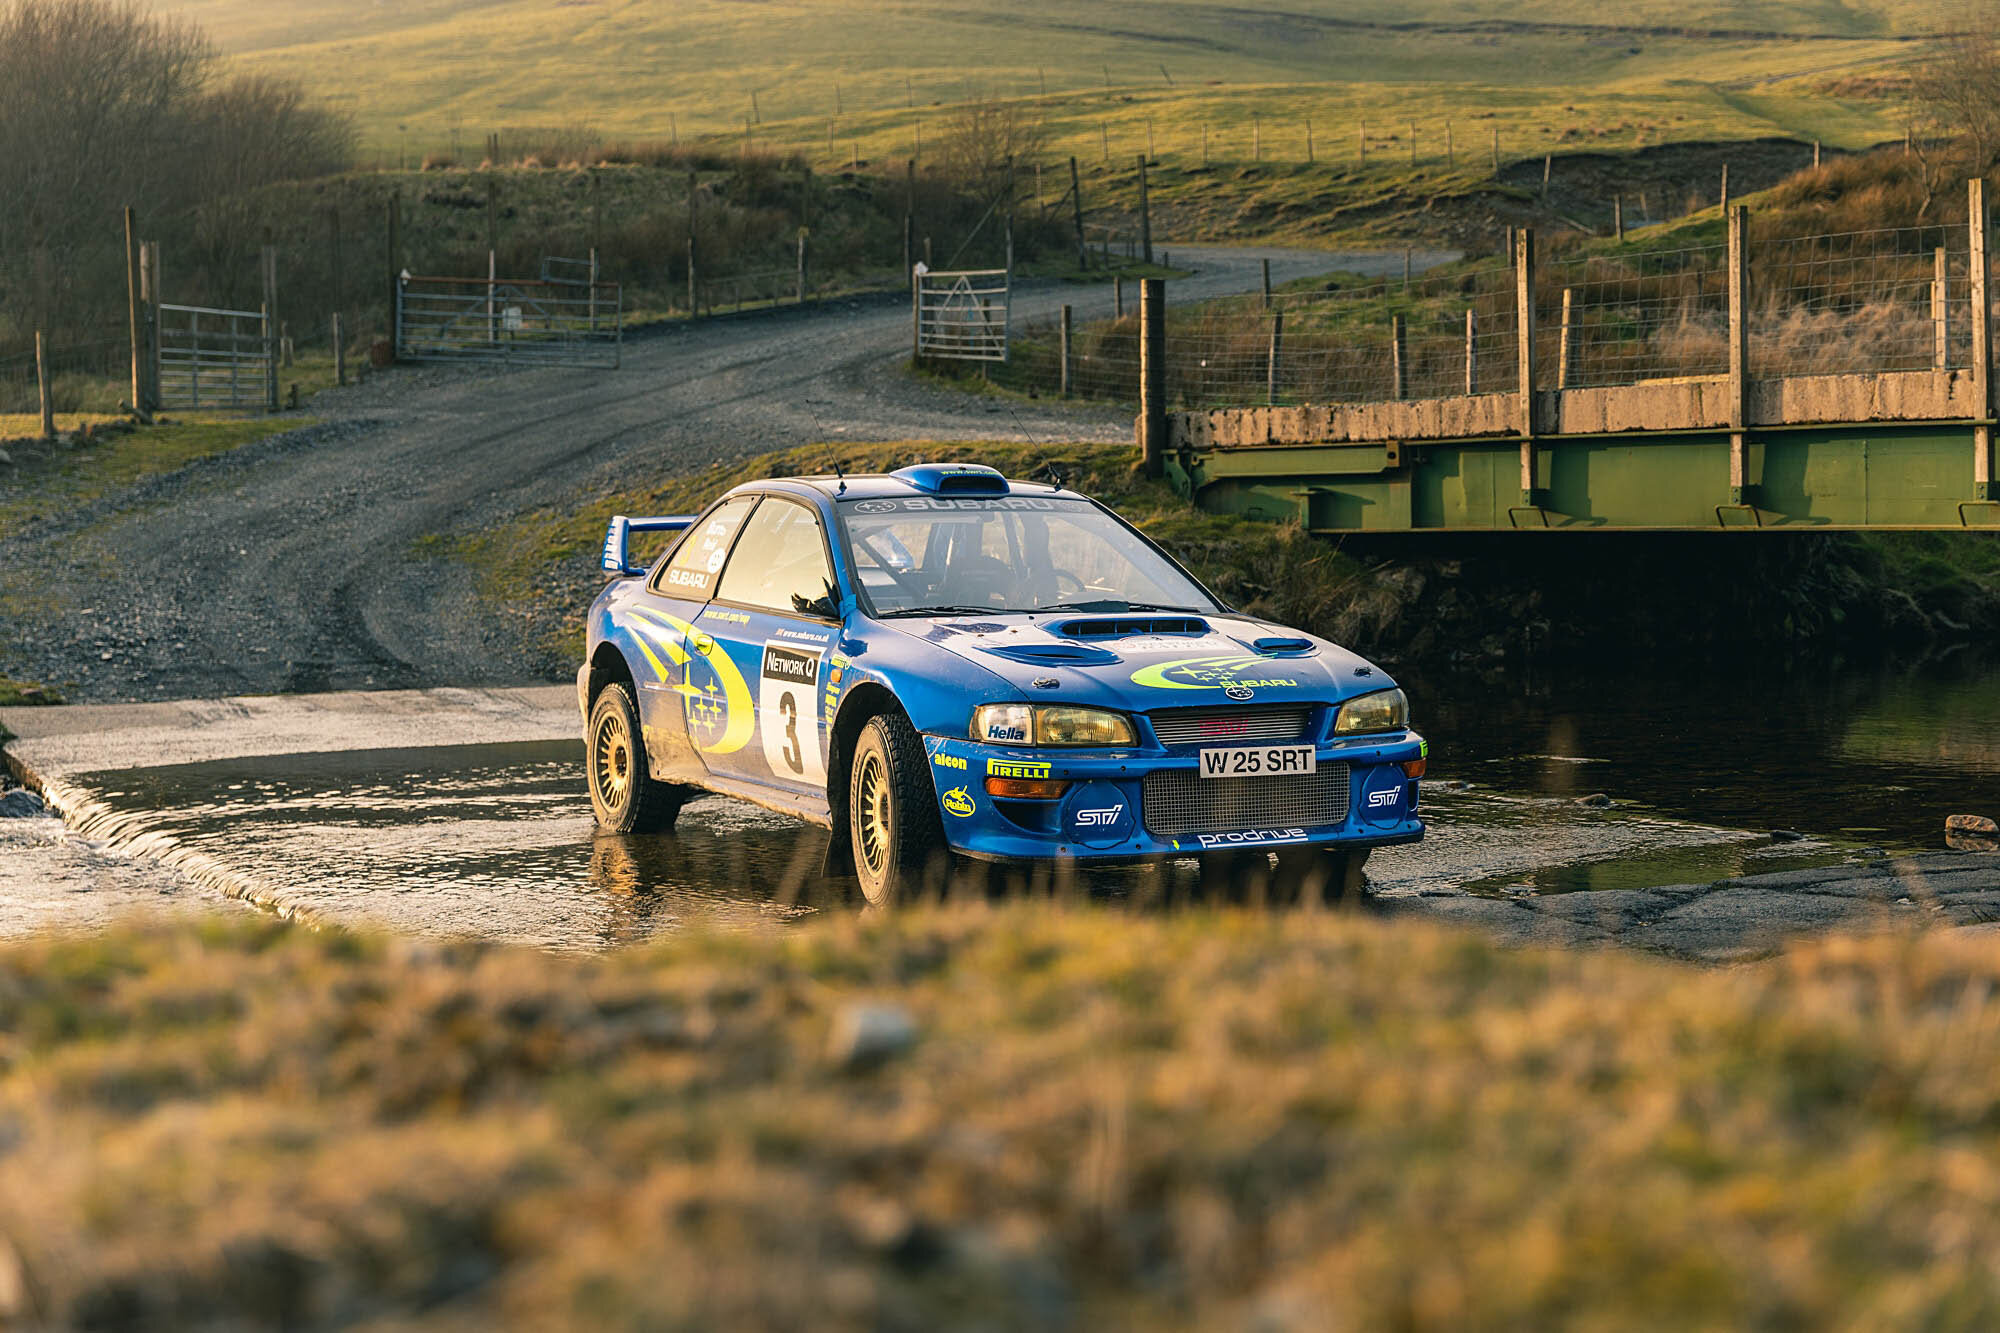 The most original WRC car in the world — Ecurie